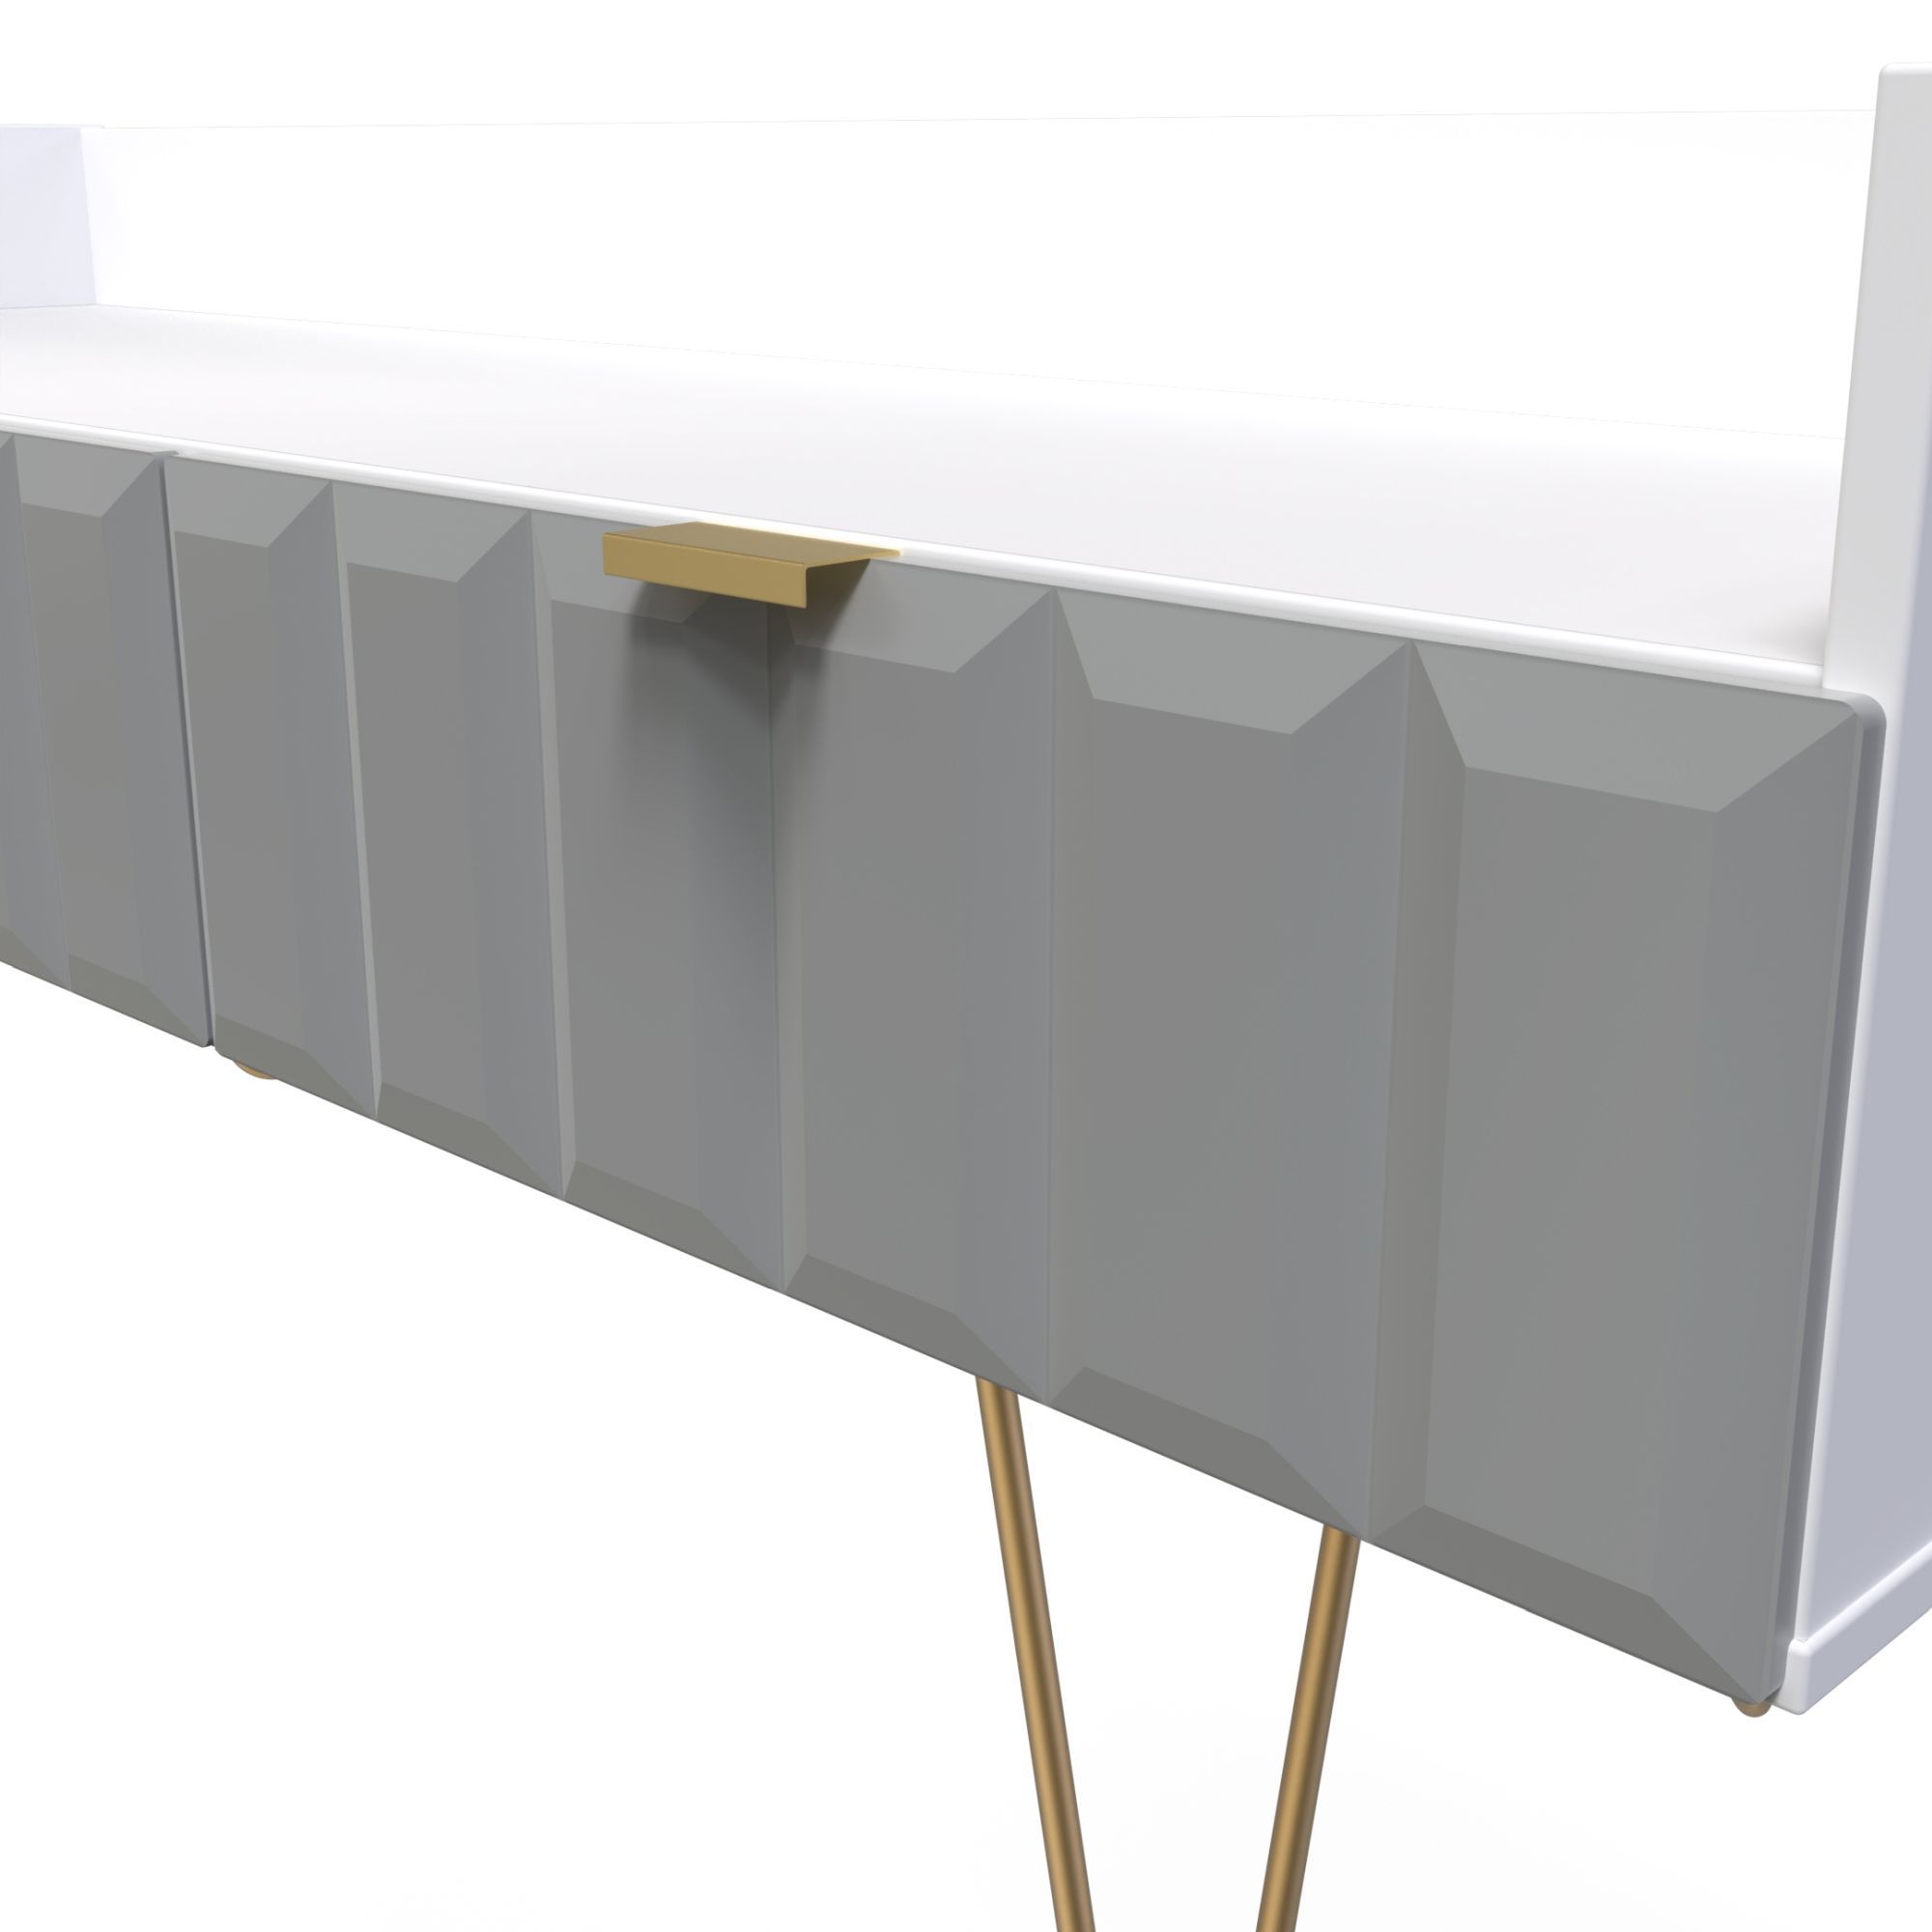 Cube Ready assembled Matt grey & white Media unit with 2 drawers, (H)128cm x (W)51.5cm x (D)39.5cm